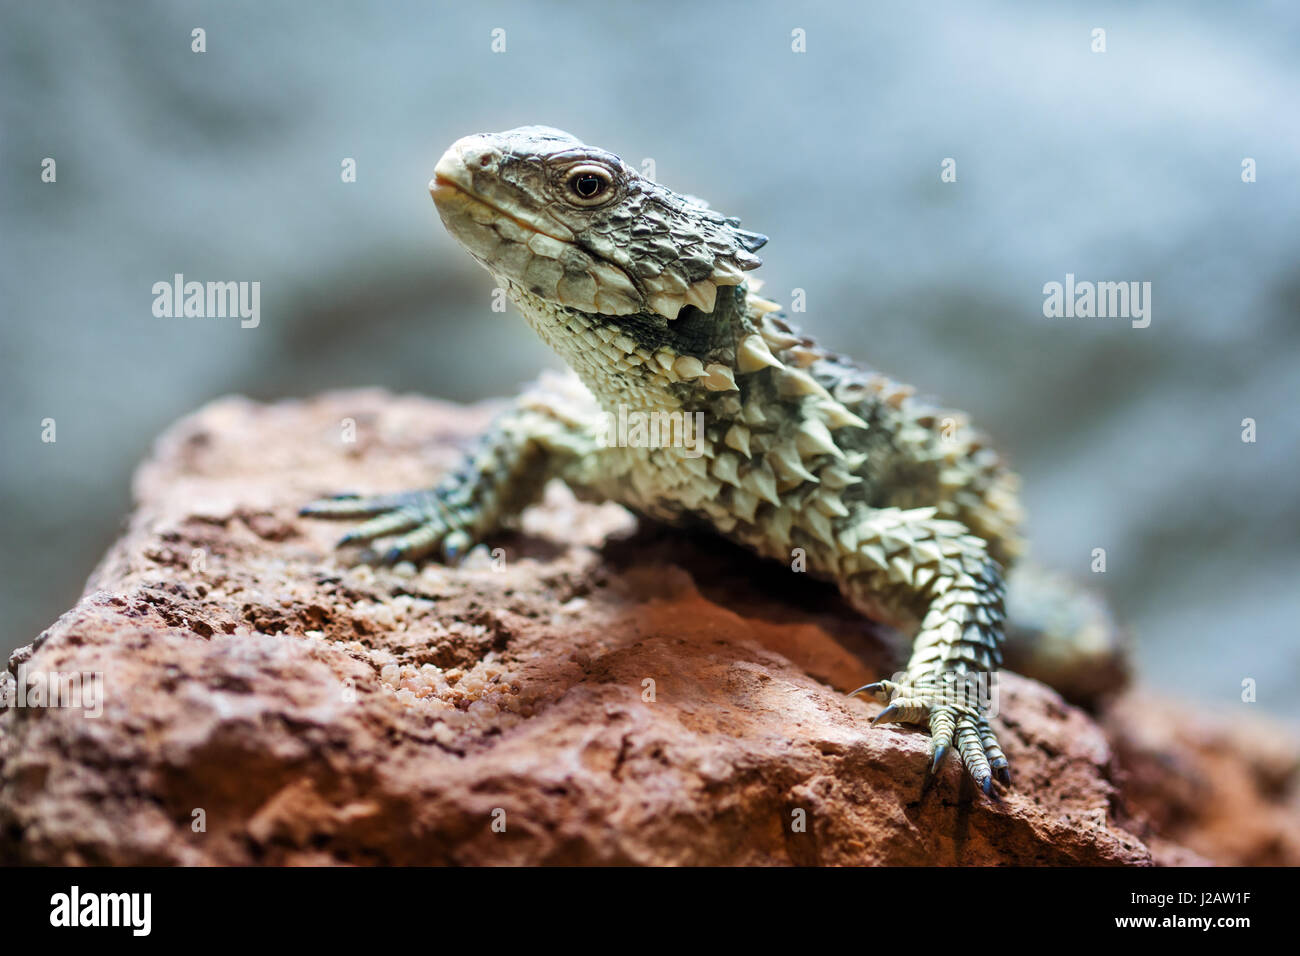 Close-up of a Sungazer, Giant girdled lizard (Smaug giganteus). Stock Photo